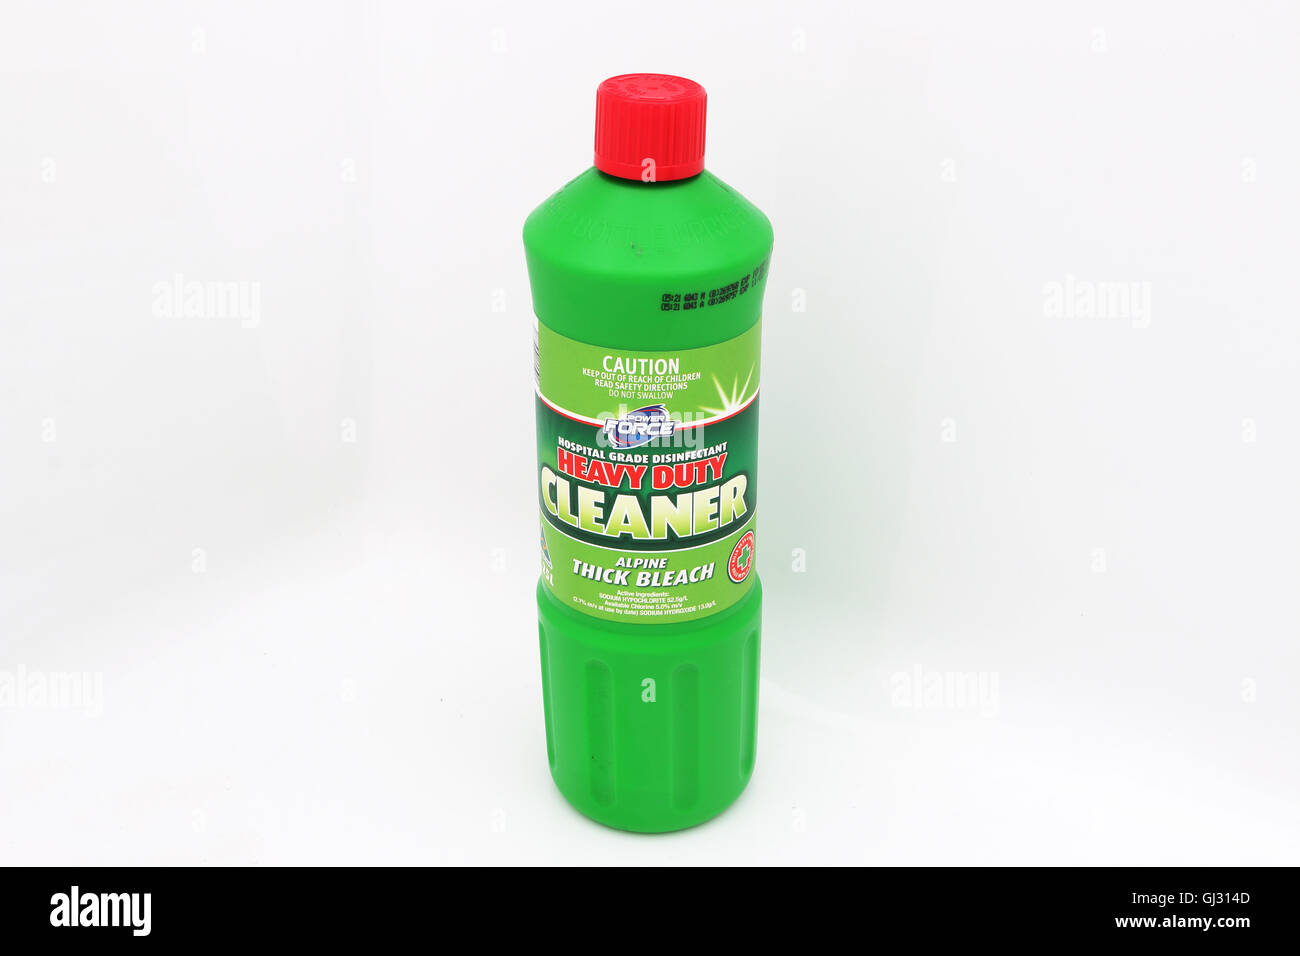 Aldi Australia household product, bleach in green plastic bottle against white background Stock Photo